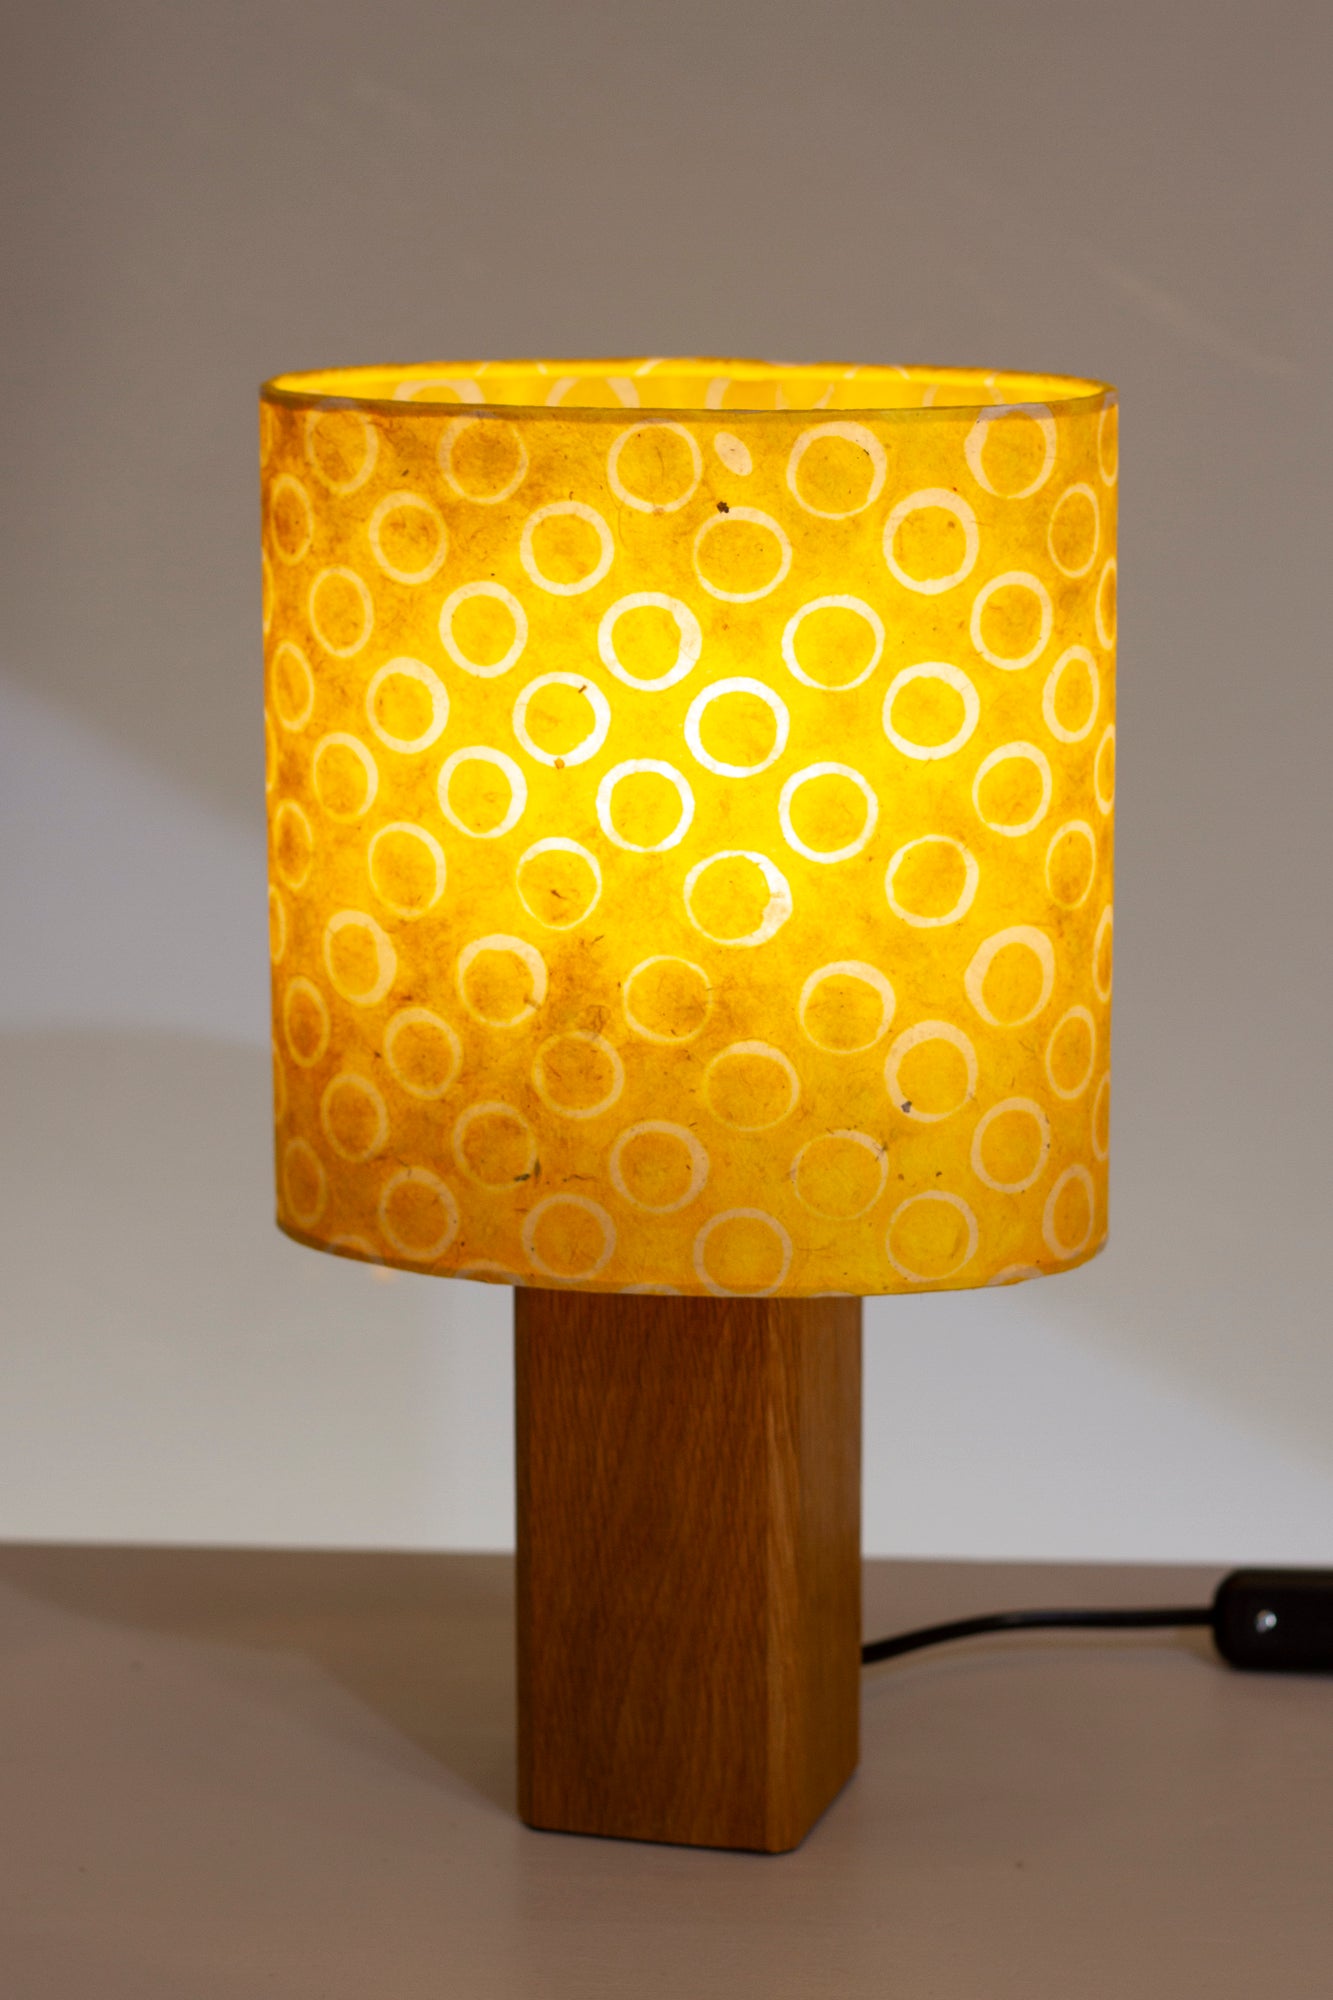 Square Oak Table Lamp with Oval Lamp Shade P71 ~ Batik Yellow Circles